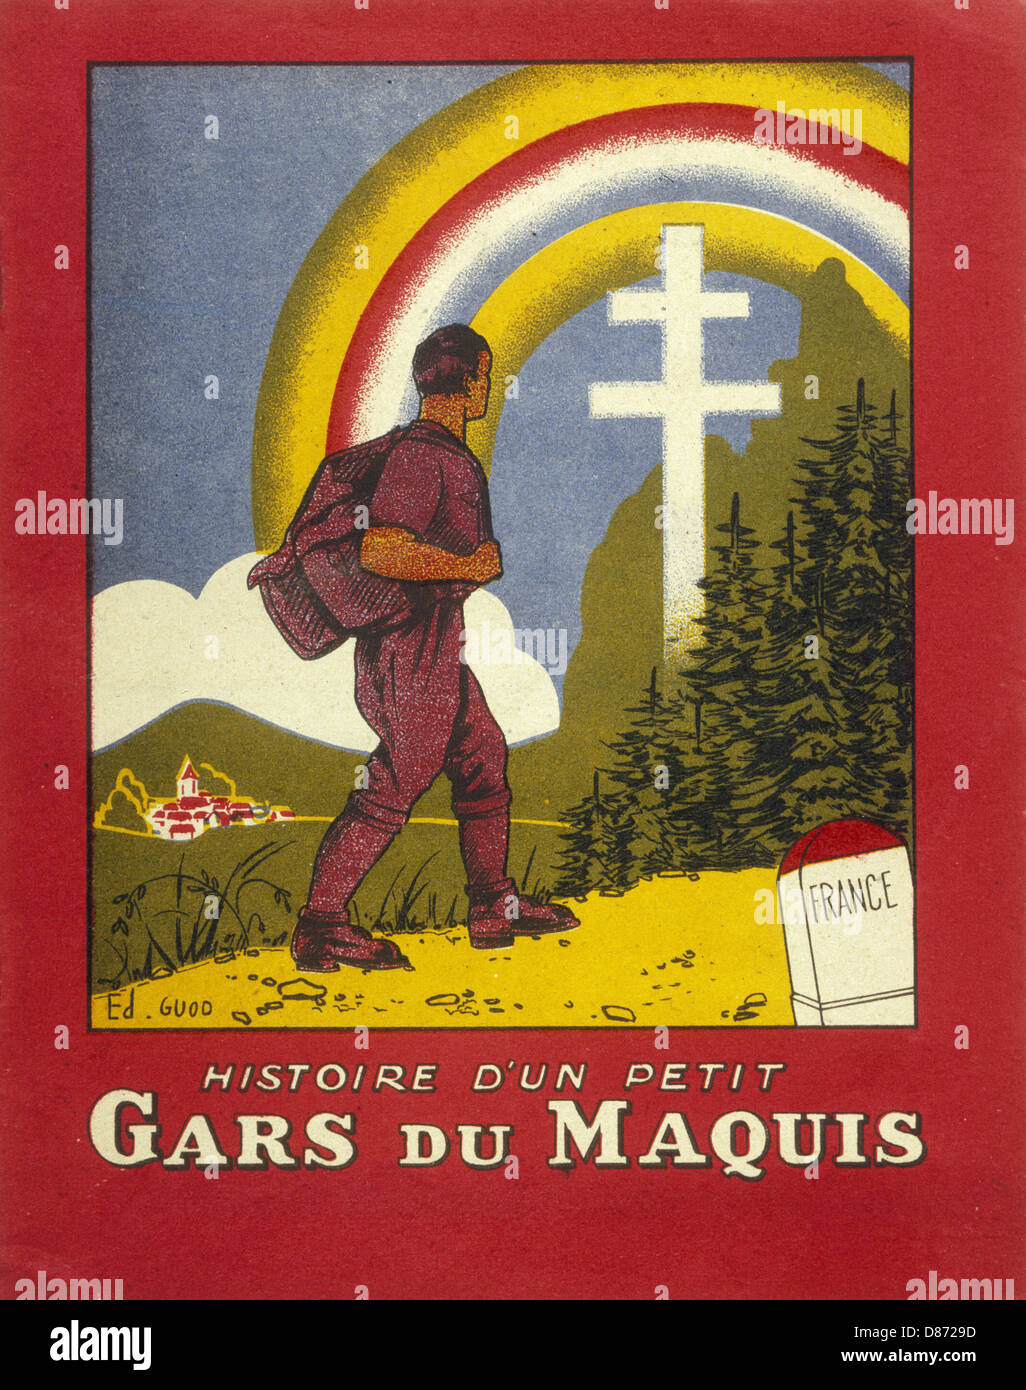 WW2 MAQUIS BOOK COVER Stock Photo